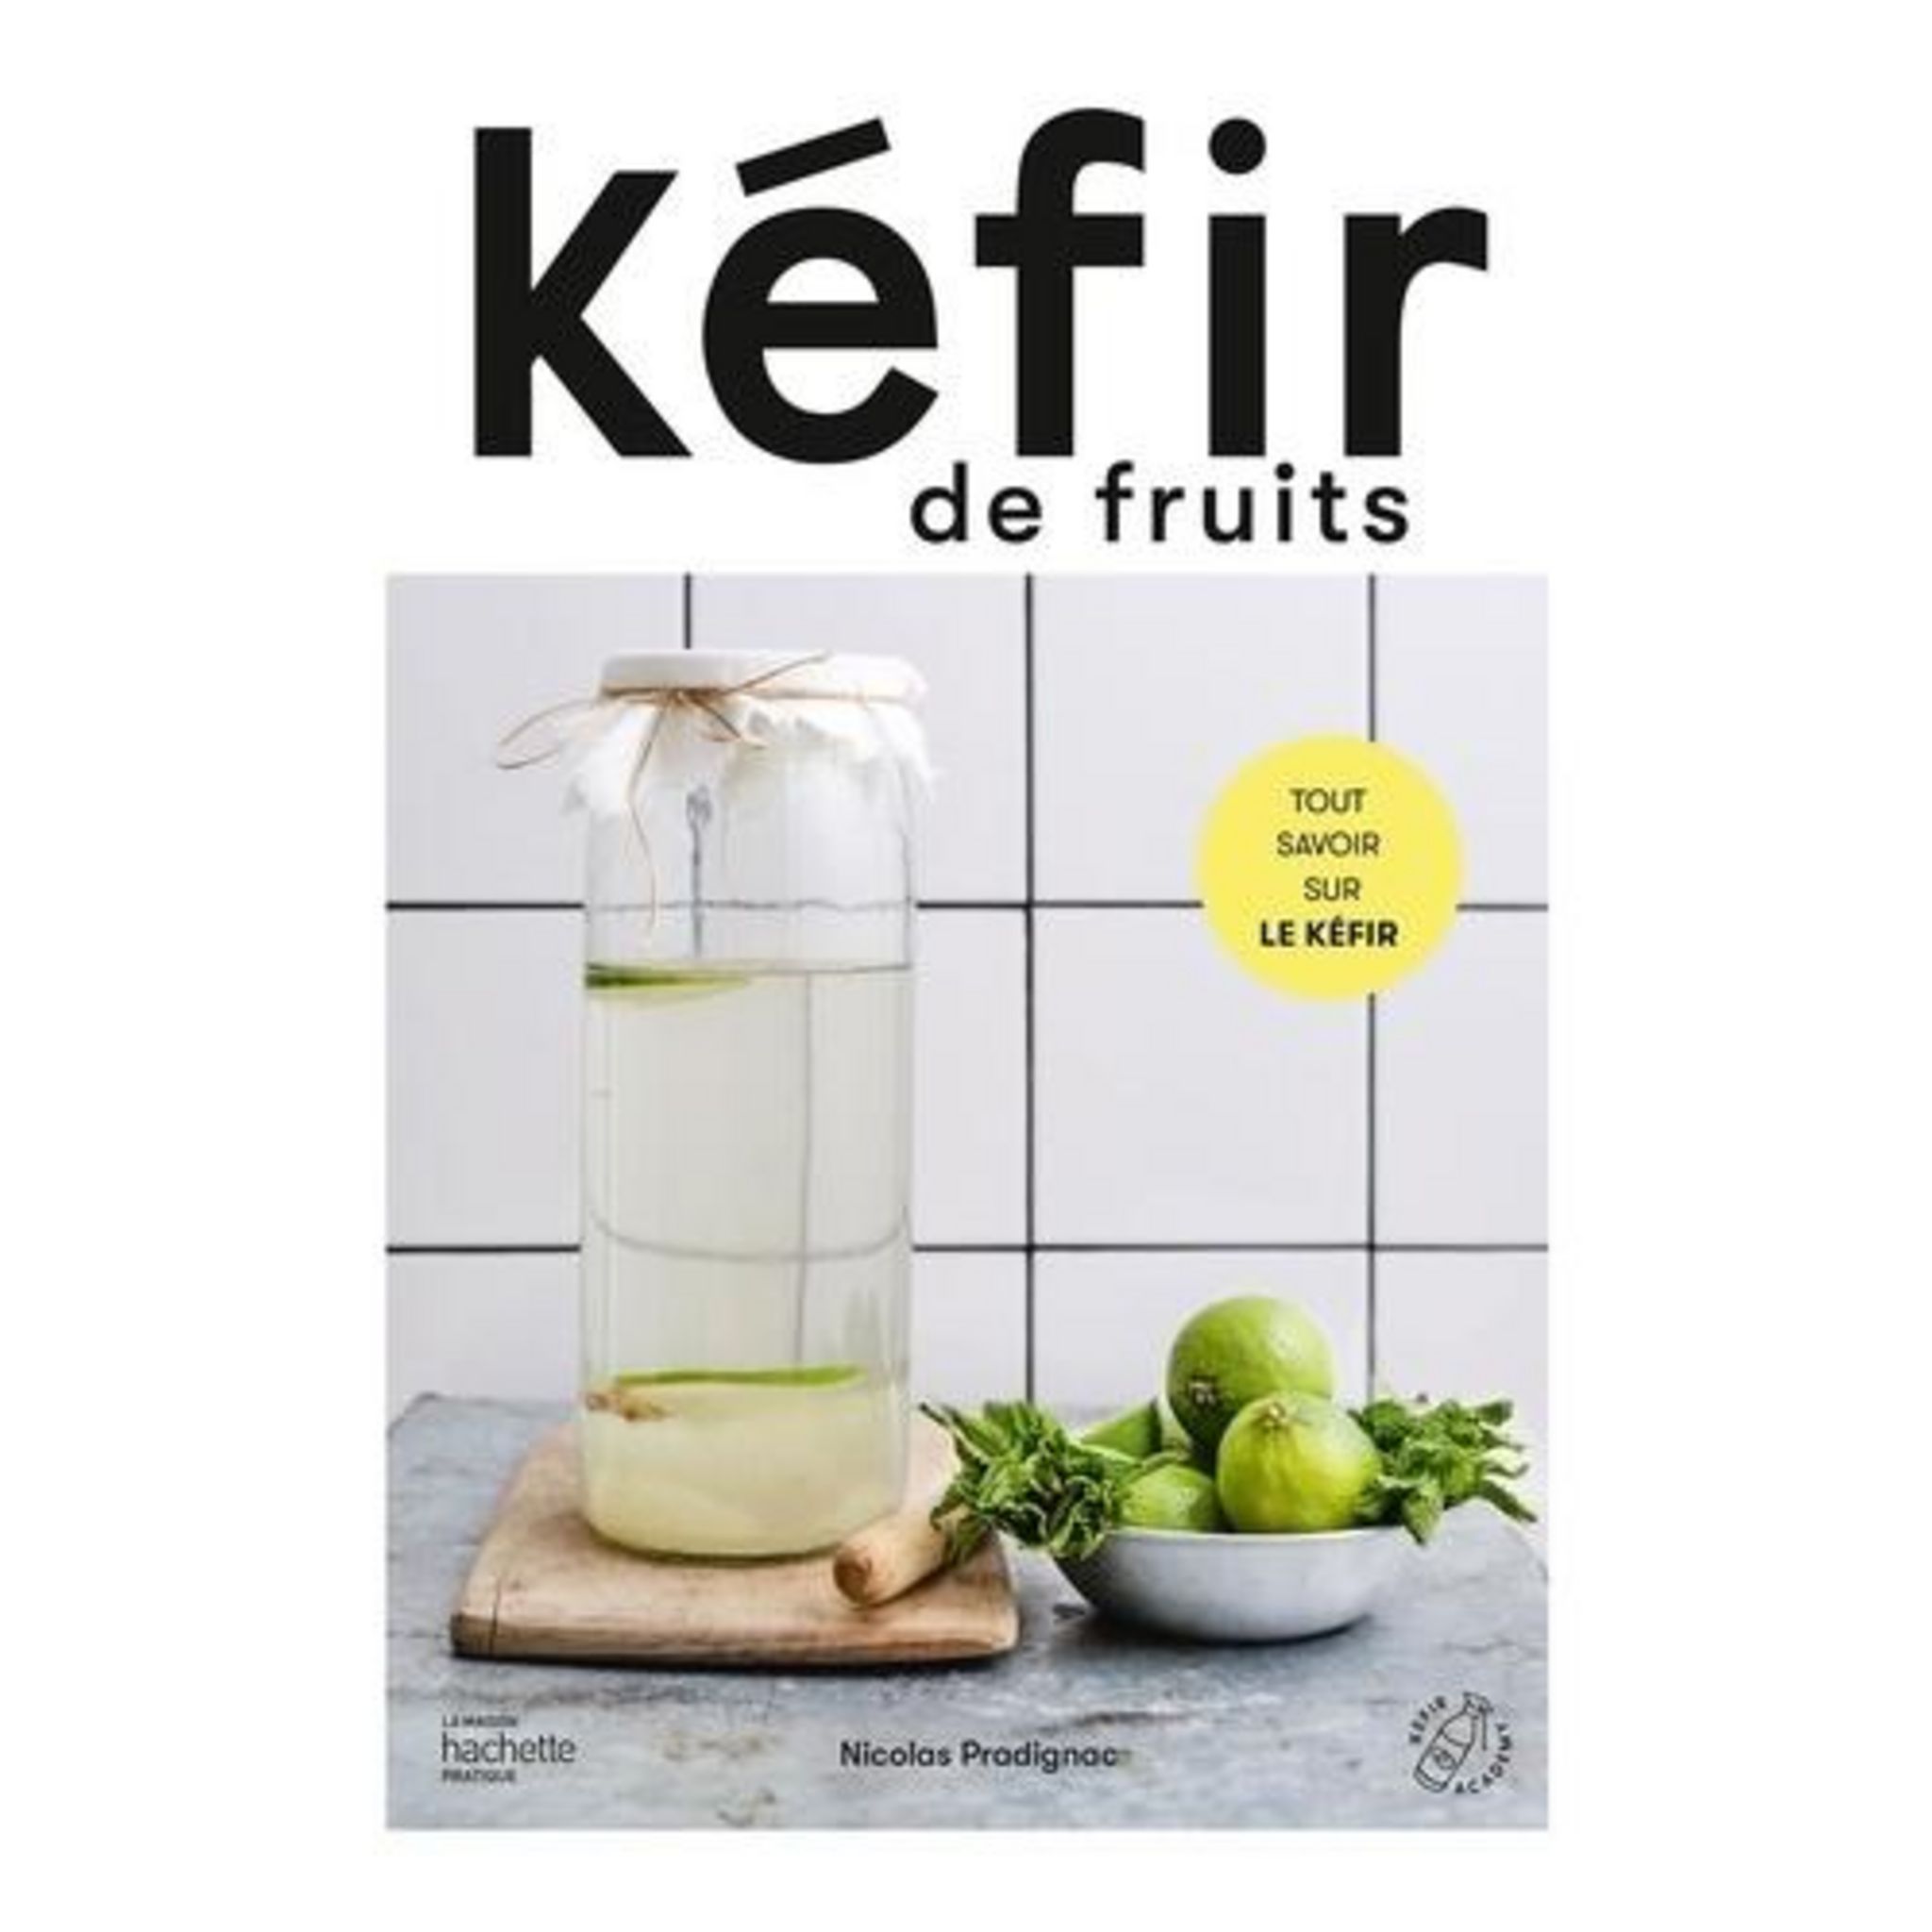 KEFIR DE FRUITS. TOUT SAVOIR SUR LE KEFIR, Pradignac Nicolas pas